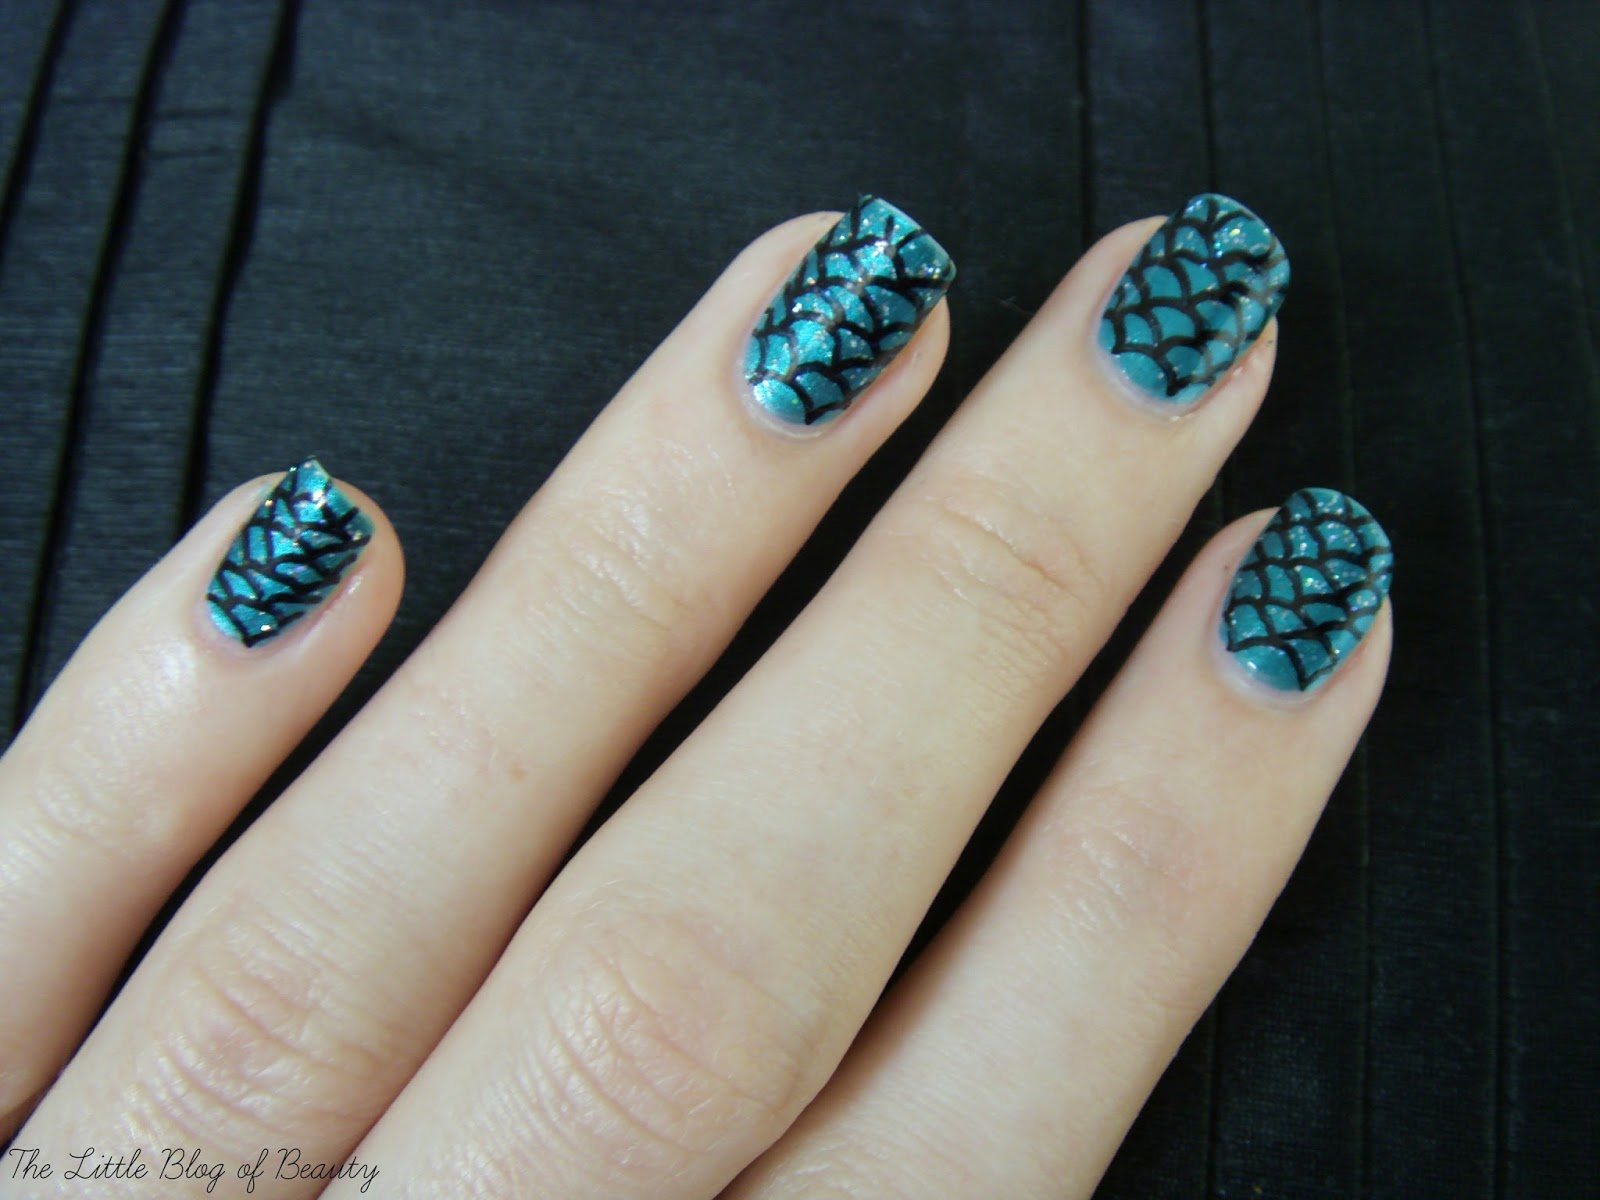 Mermaid tail nail art